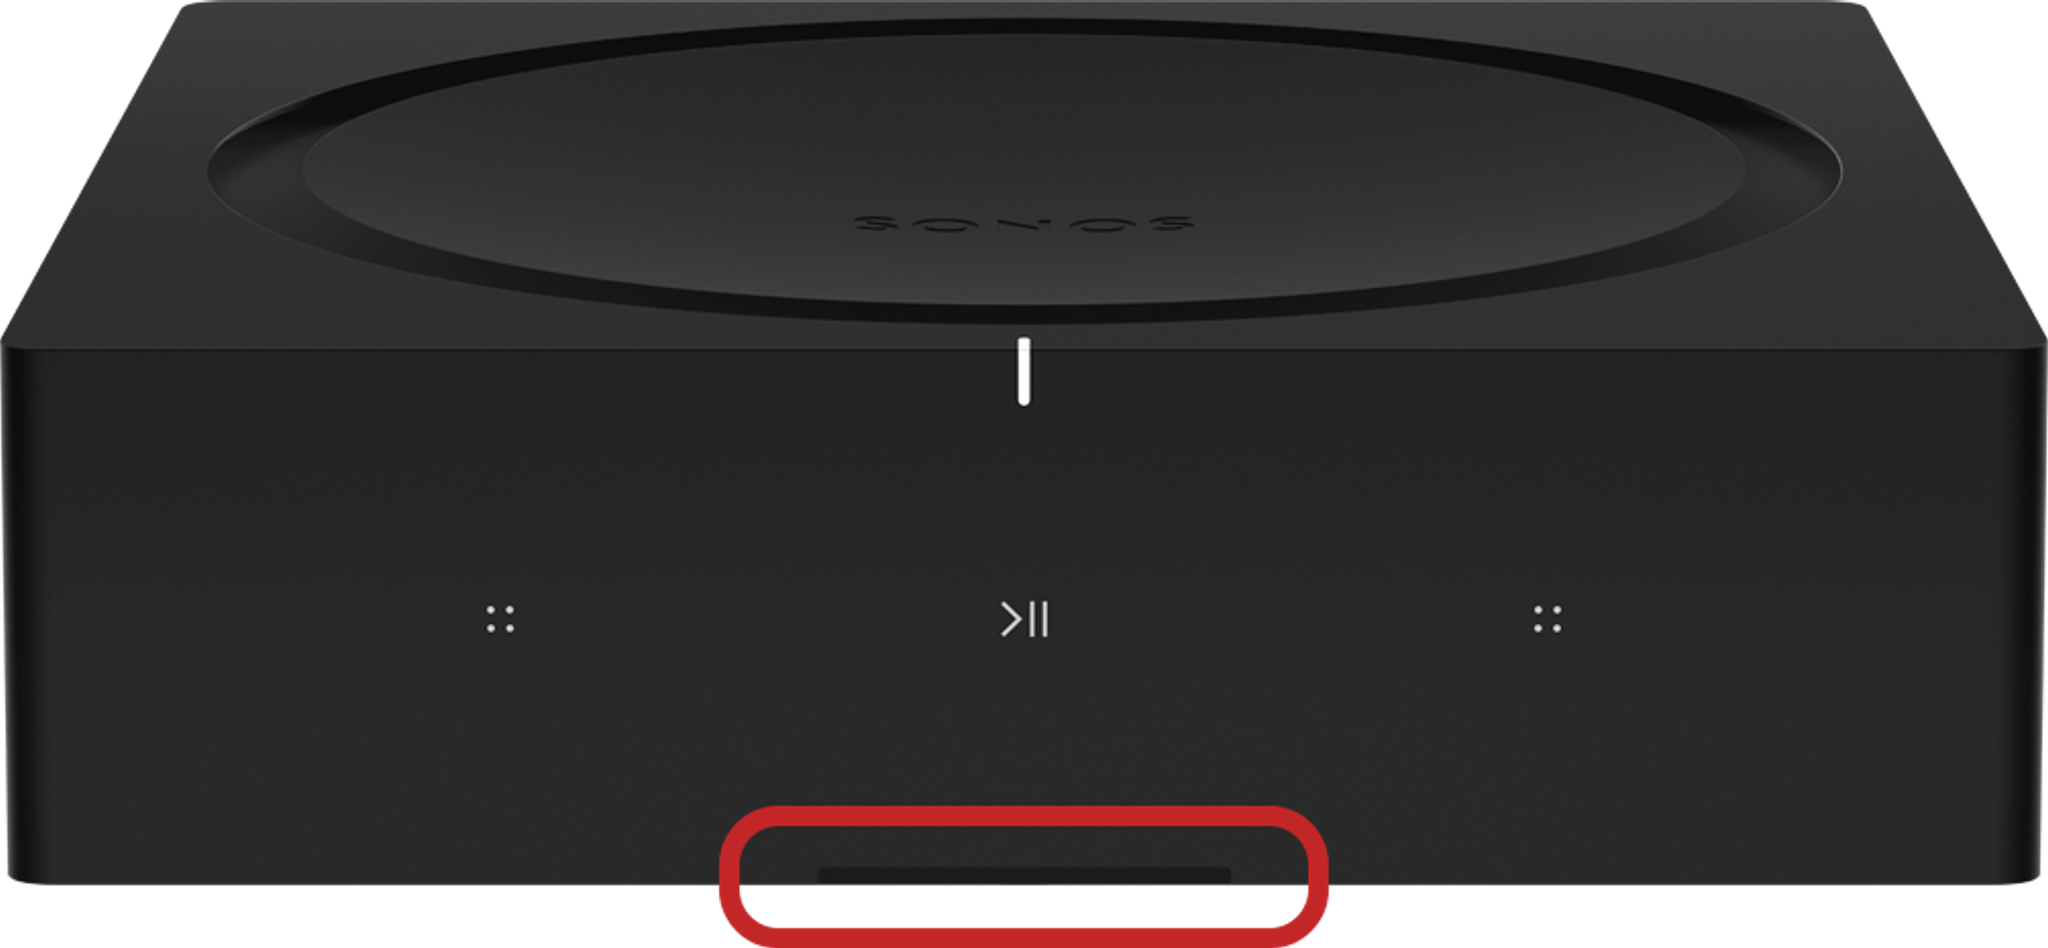 elleve Orkan tom IR sensor location on Sonos home theater products | Sonos